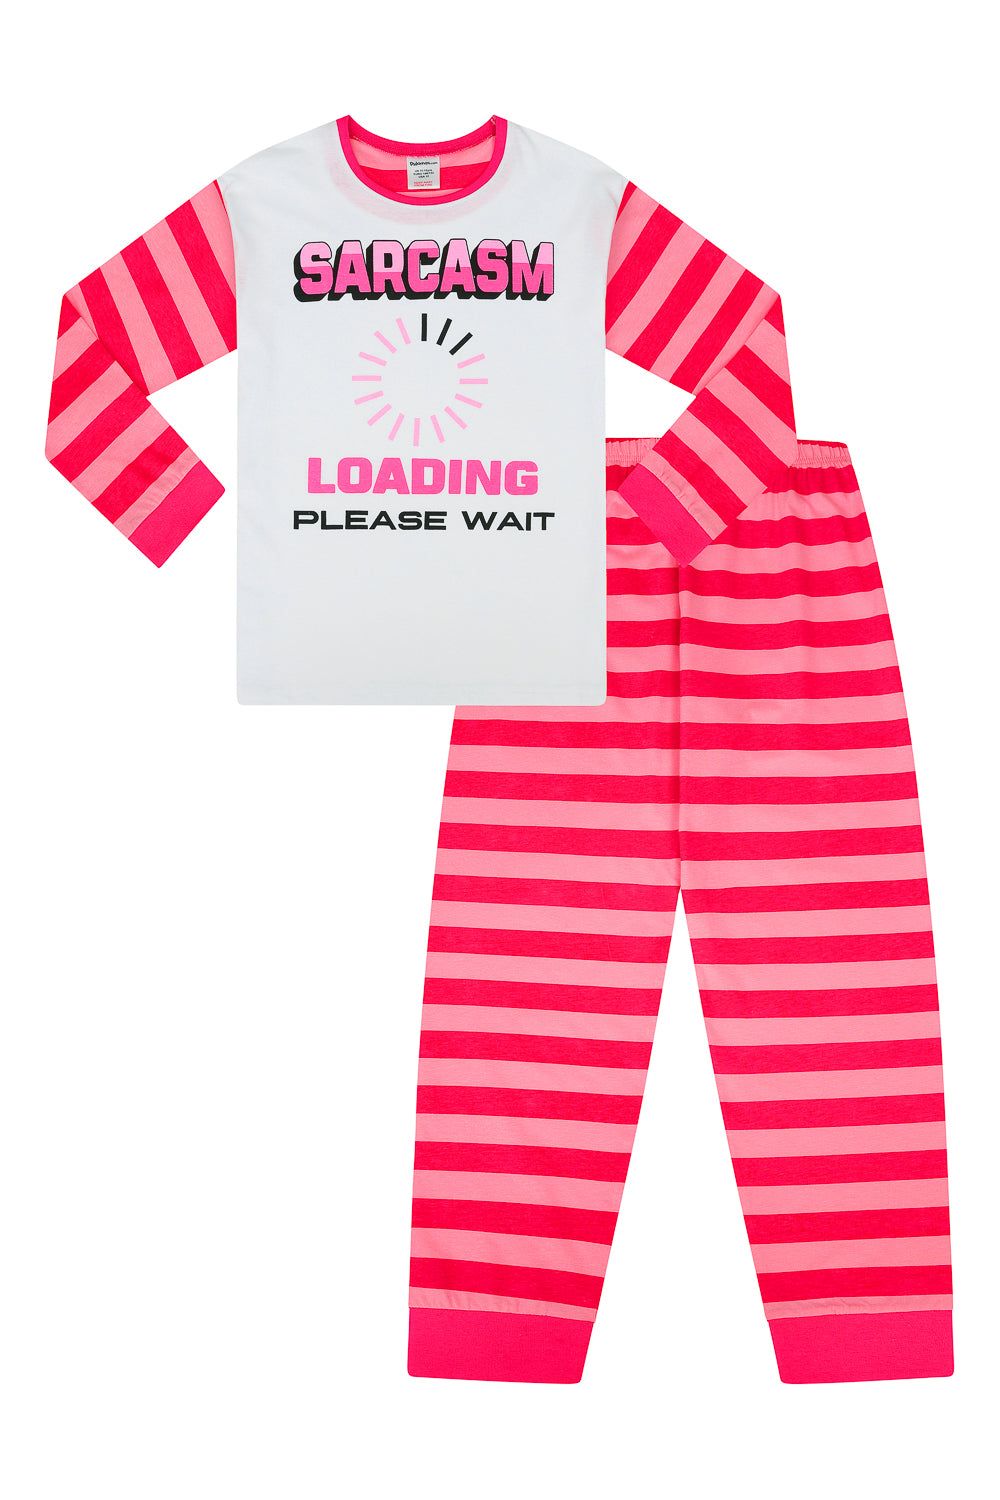 Girls Cheeky Sarcasm Loading Please Wait !! Pyjamas - Pyjamas.com